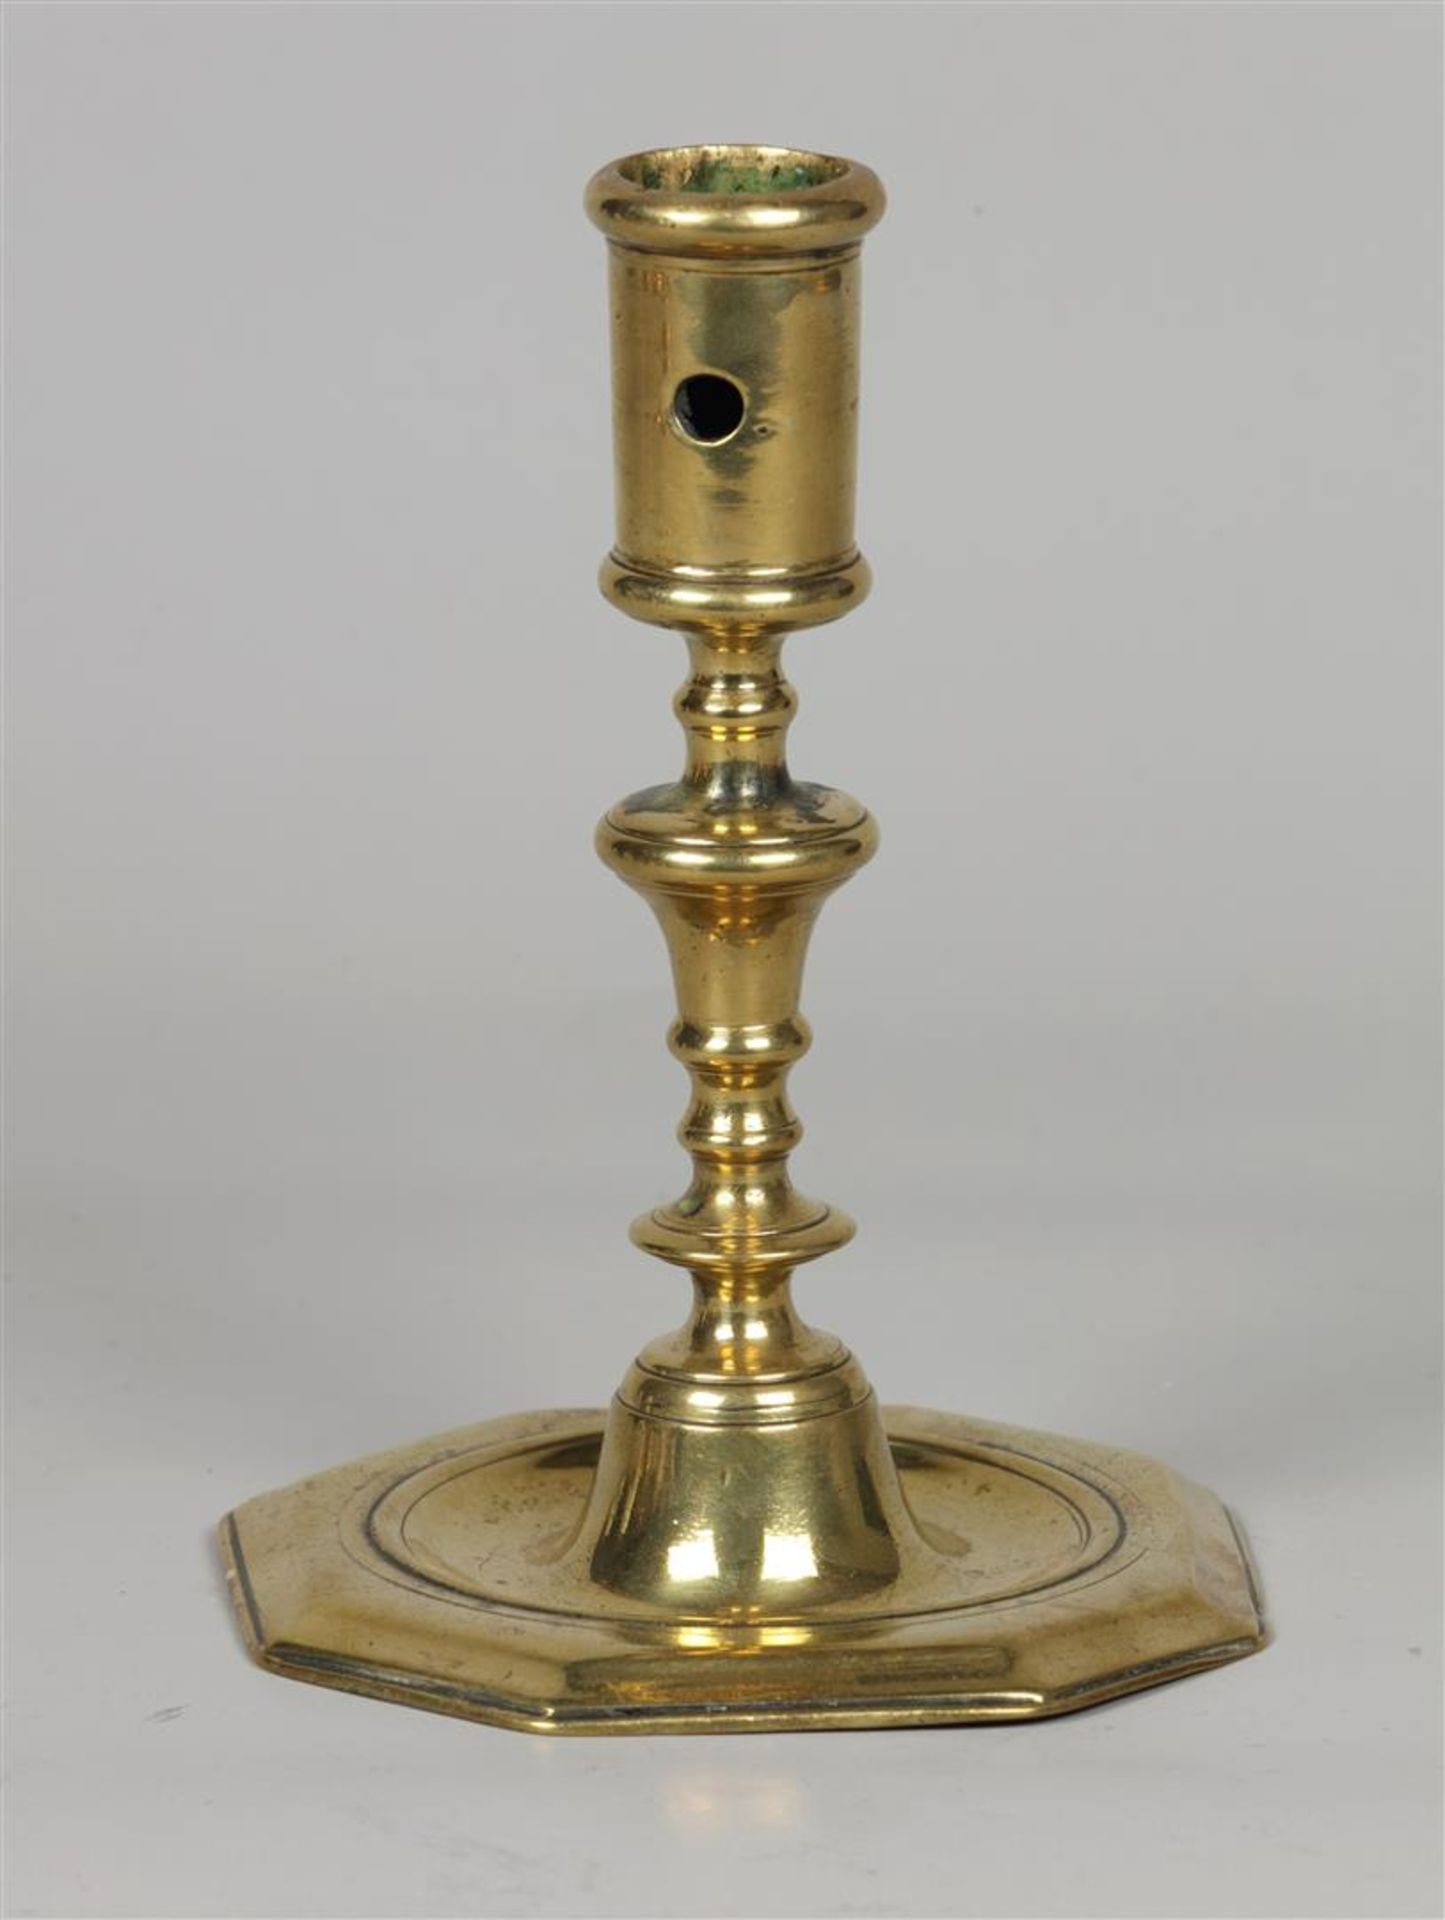 A bronze candlestick. Netherlands, 18th century.
H.: 15 cm.